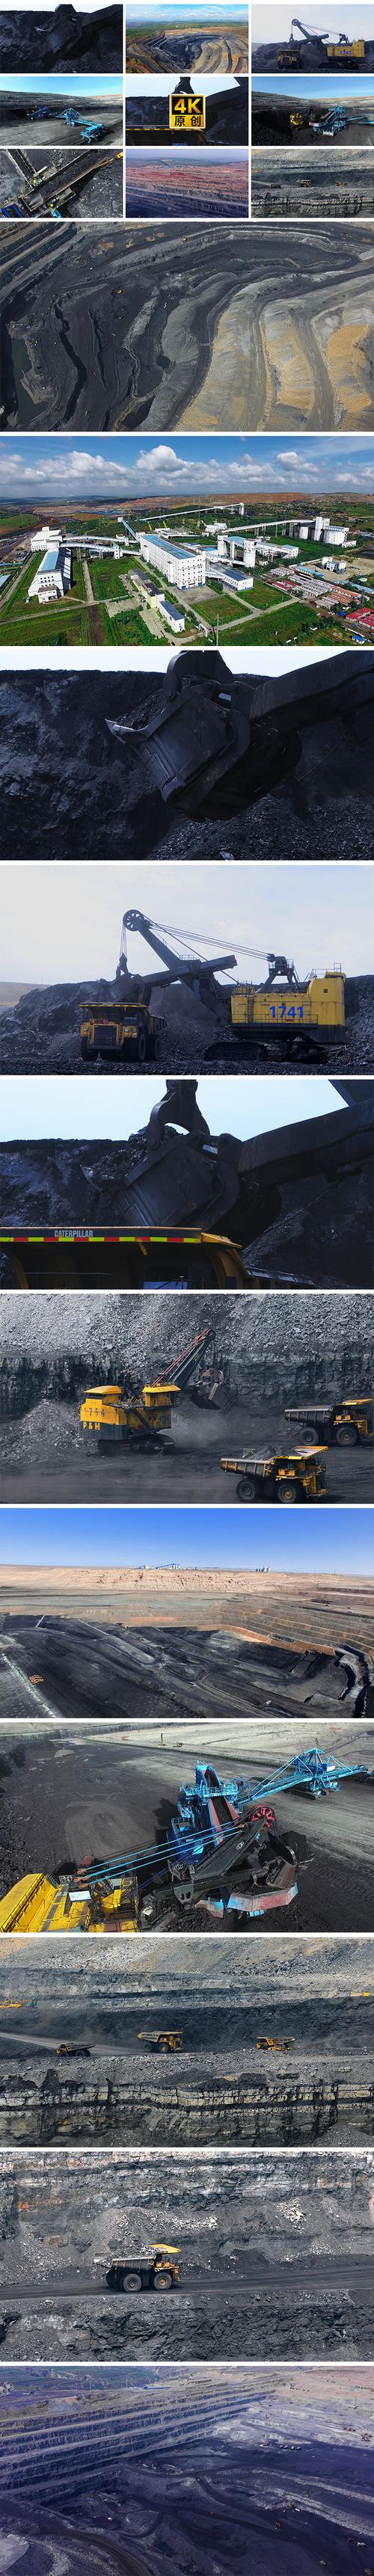 煤矿矿山煤矿开采露天煤矿矿山机械大型露天煤矿重型机械露天开采煤炭